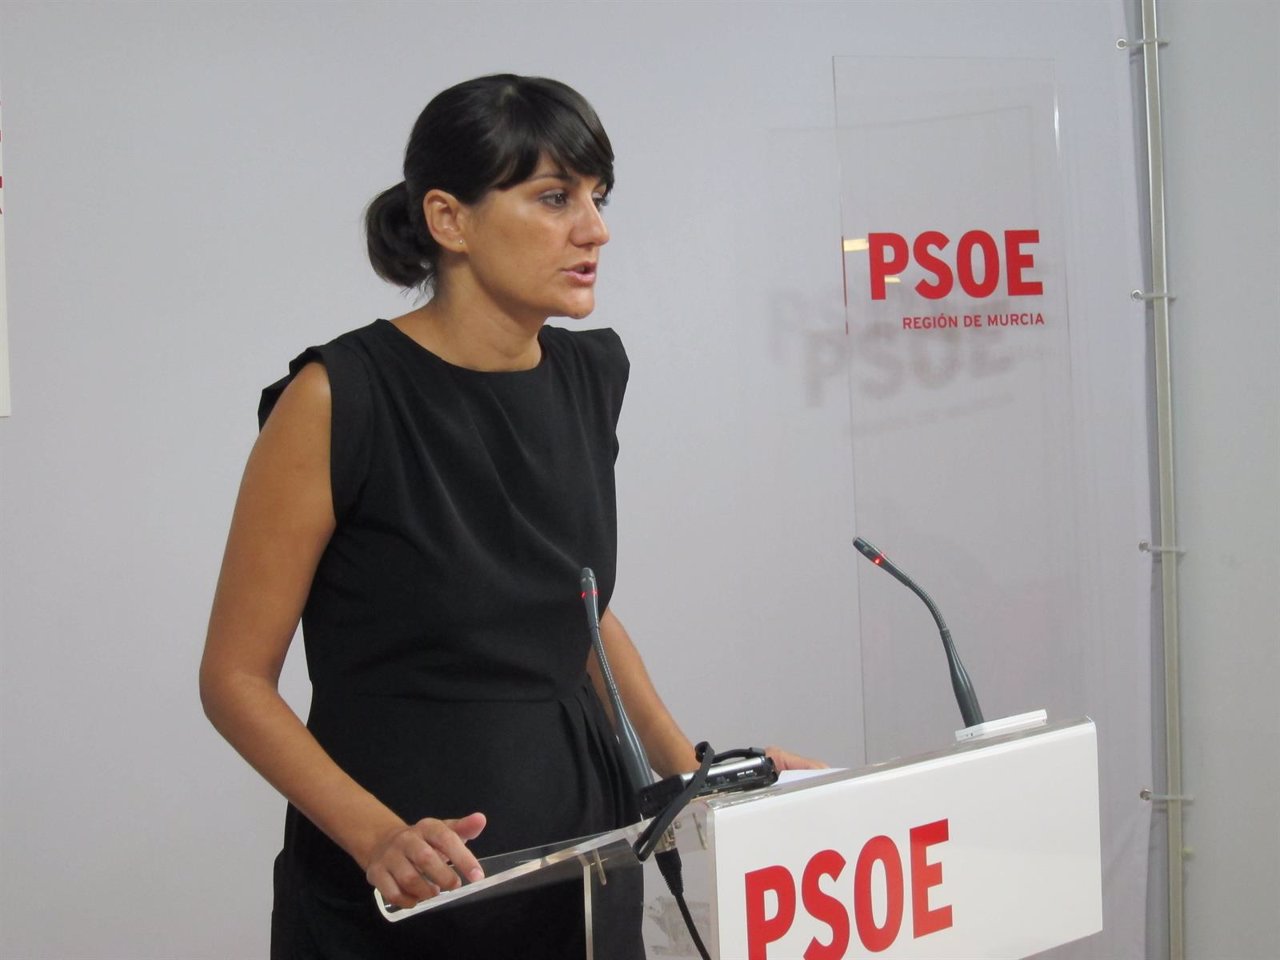 Laq diputada socialista María González Veracruz